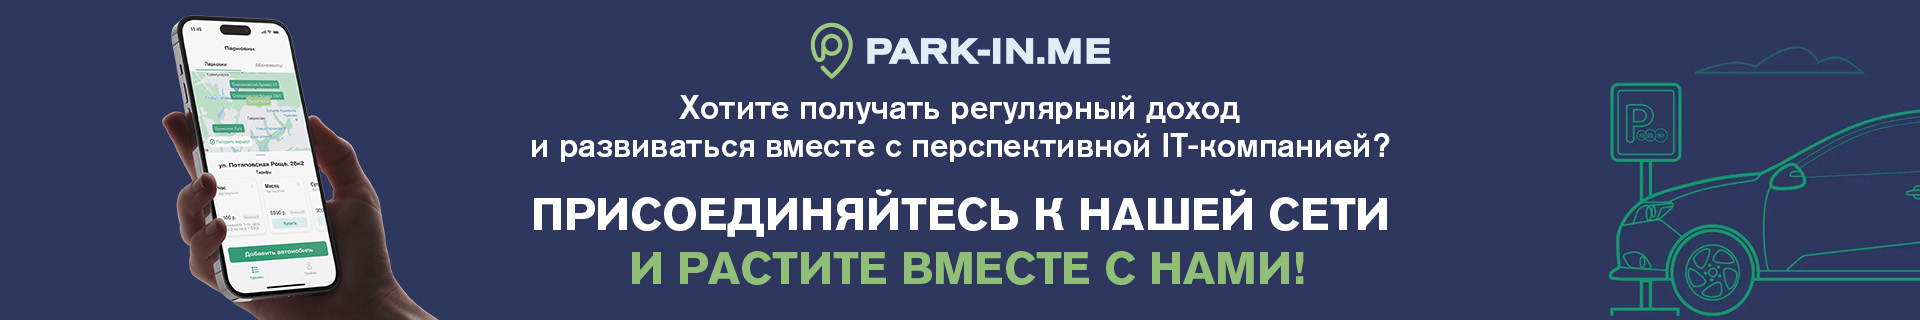 Франшиза оператора платных парковок PARK-IN.ME